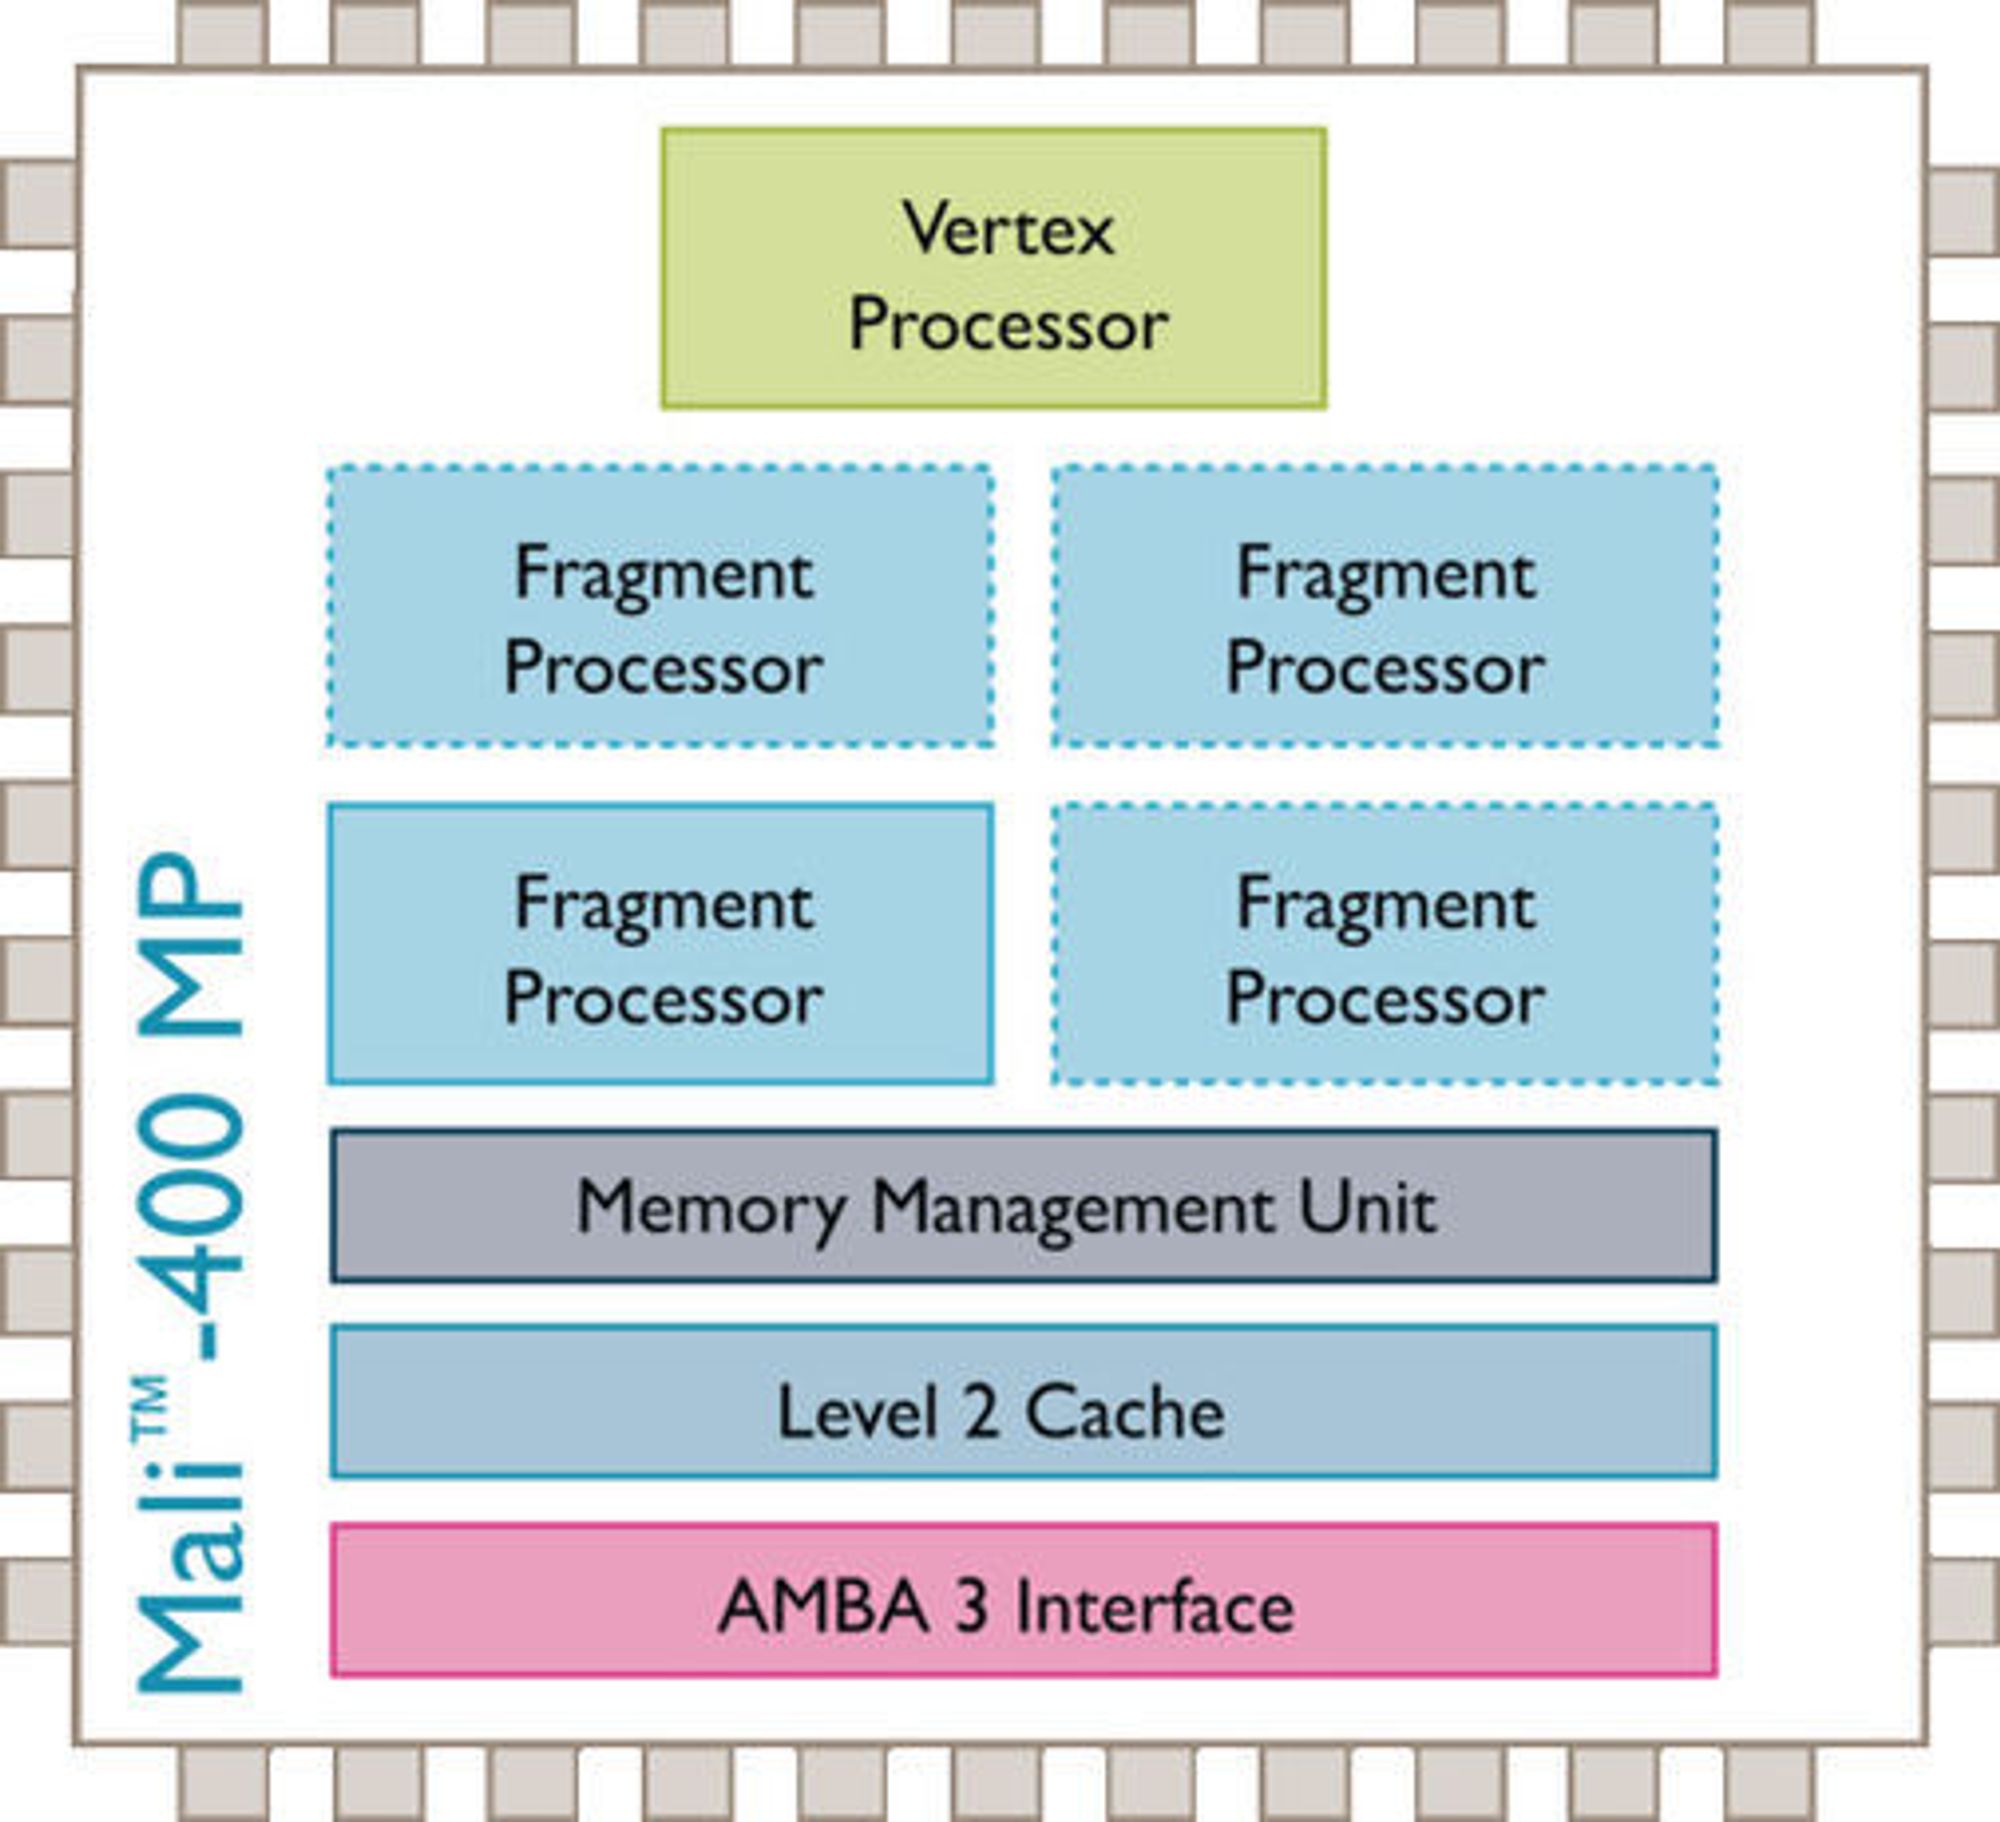 Blokkdiagram over GPU-en ARM Mali-400 MP